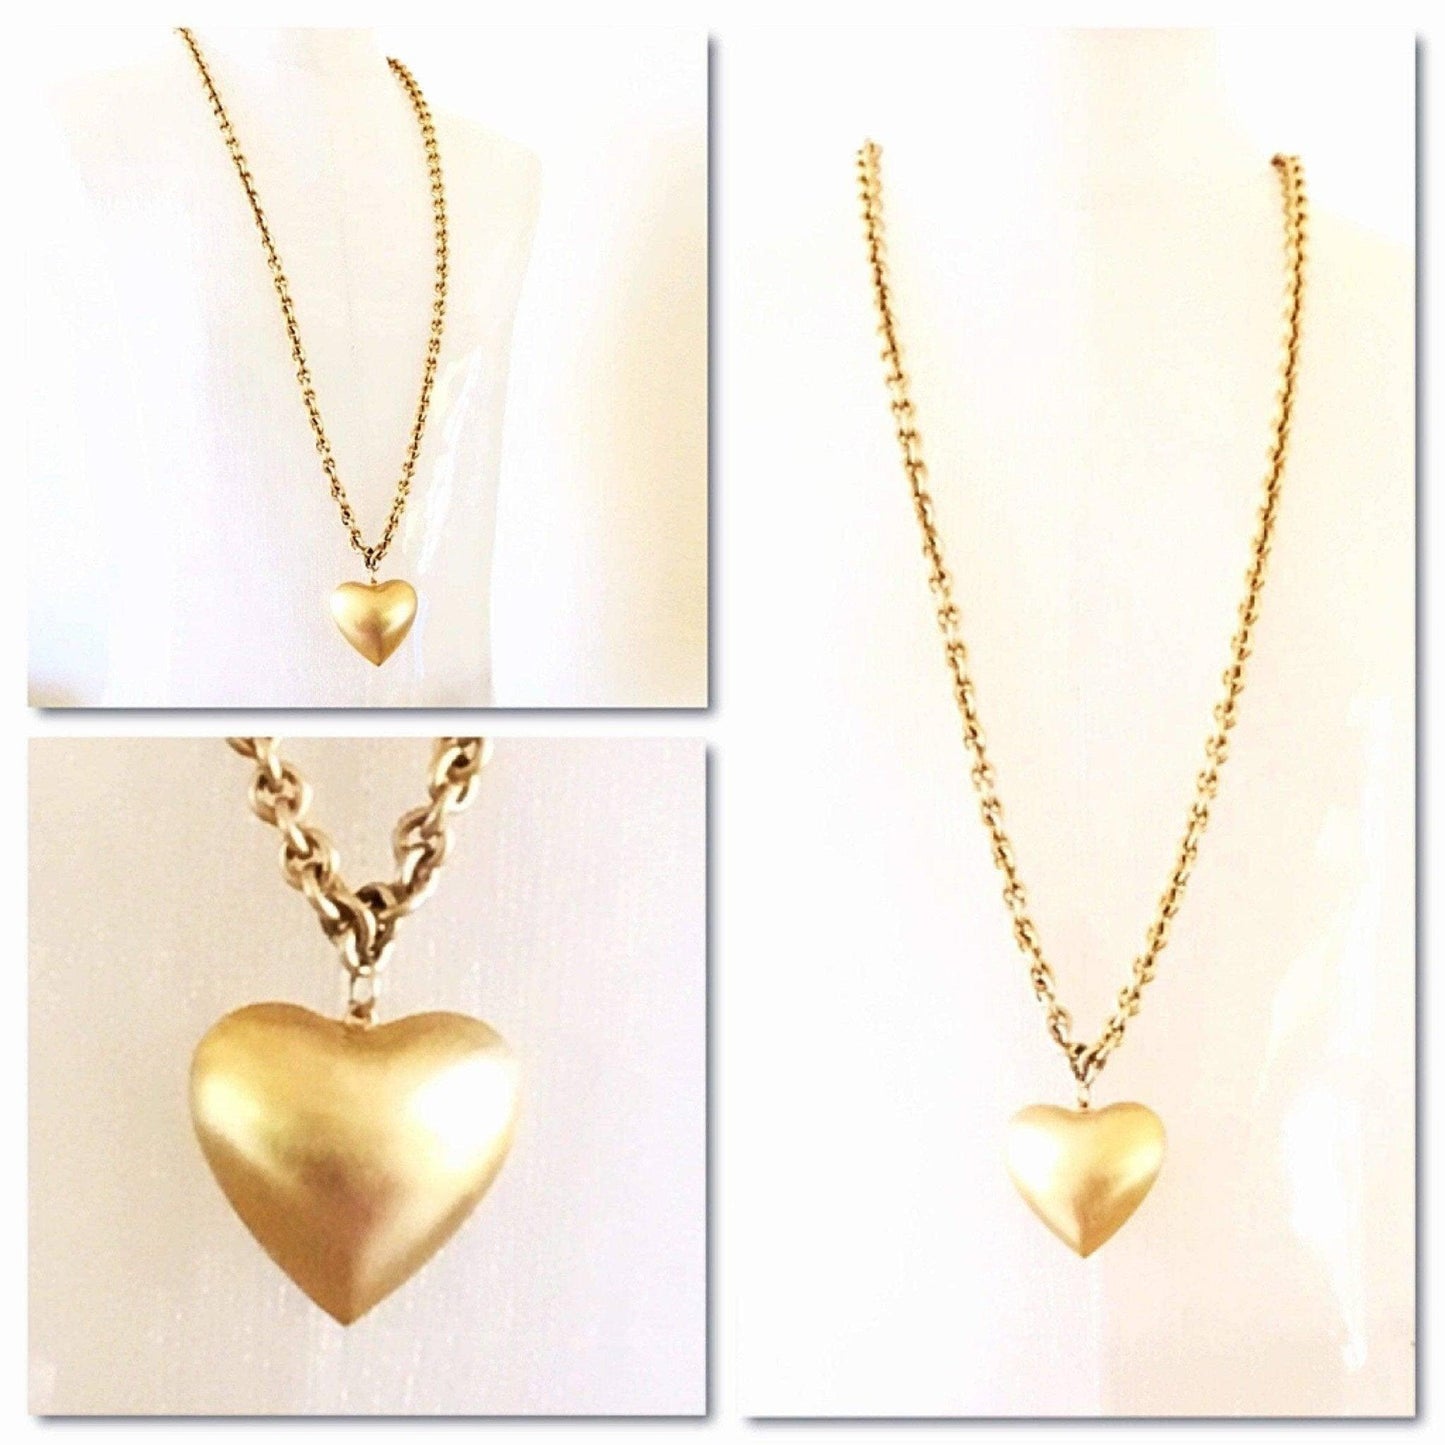 Women's puffed heart pendant necklace